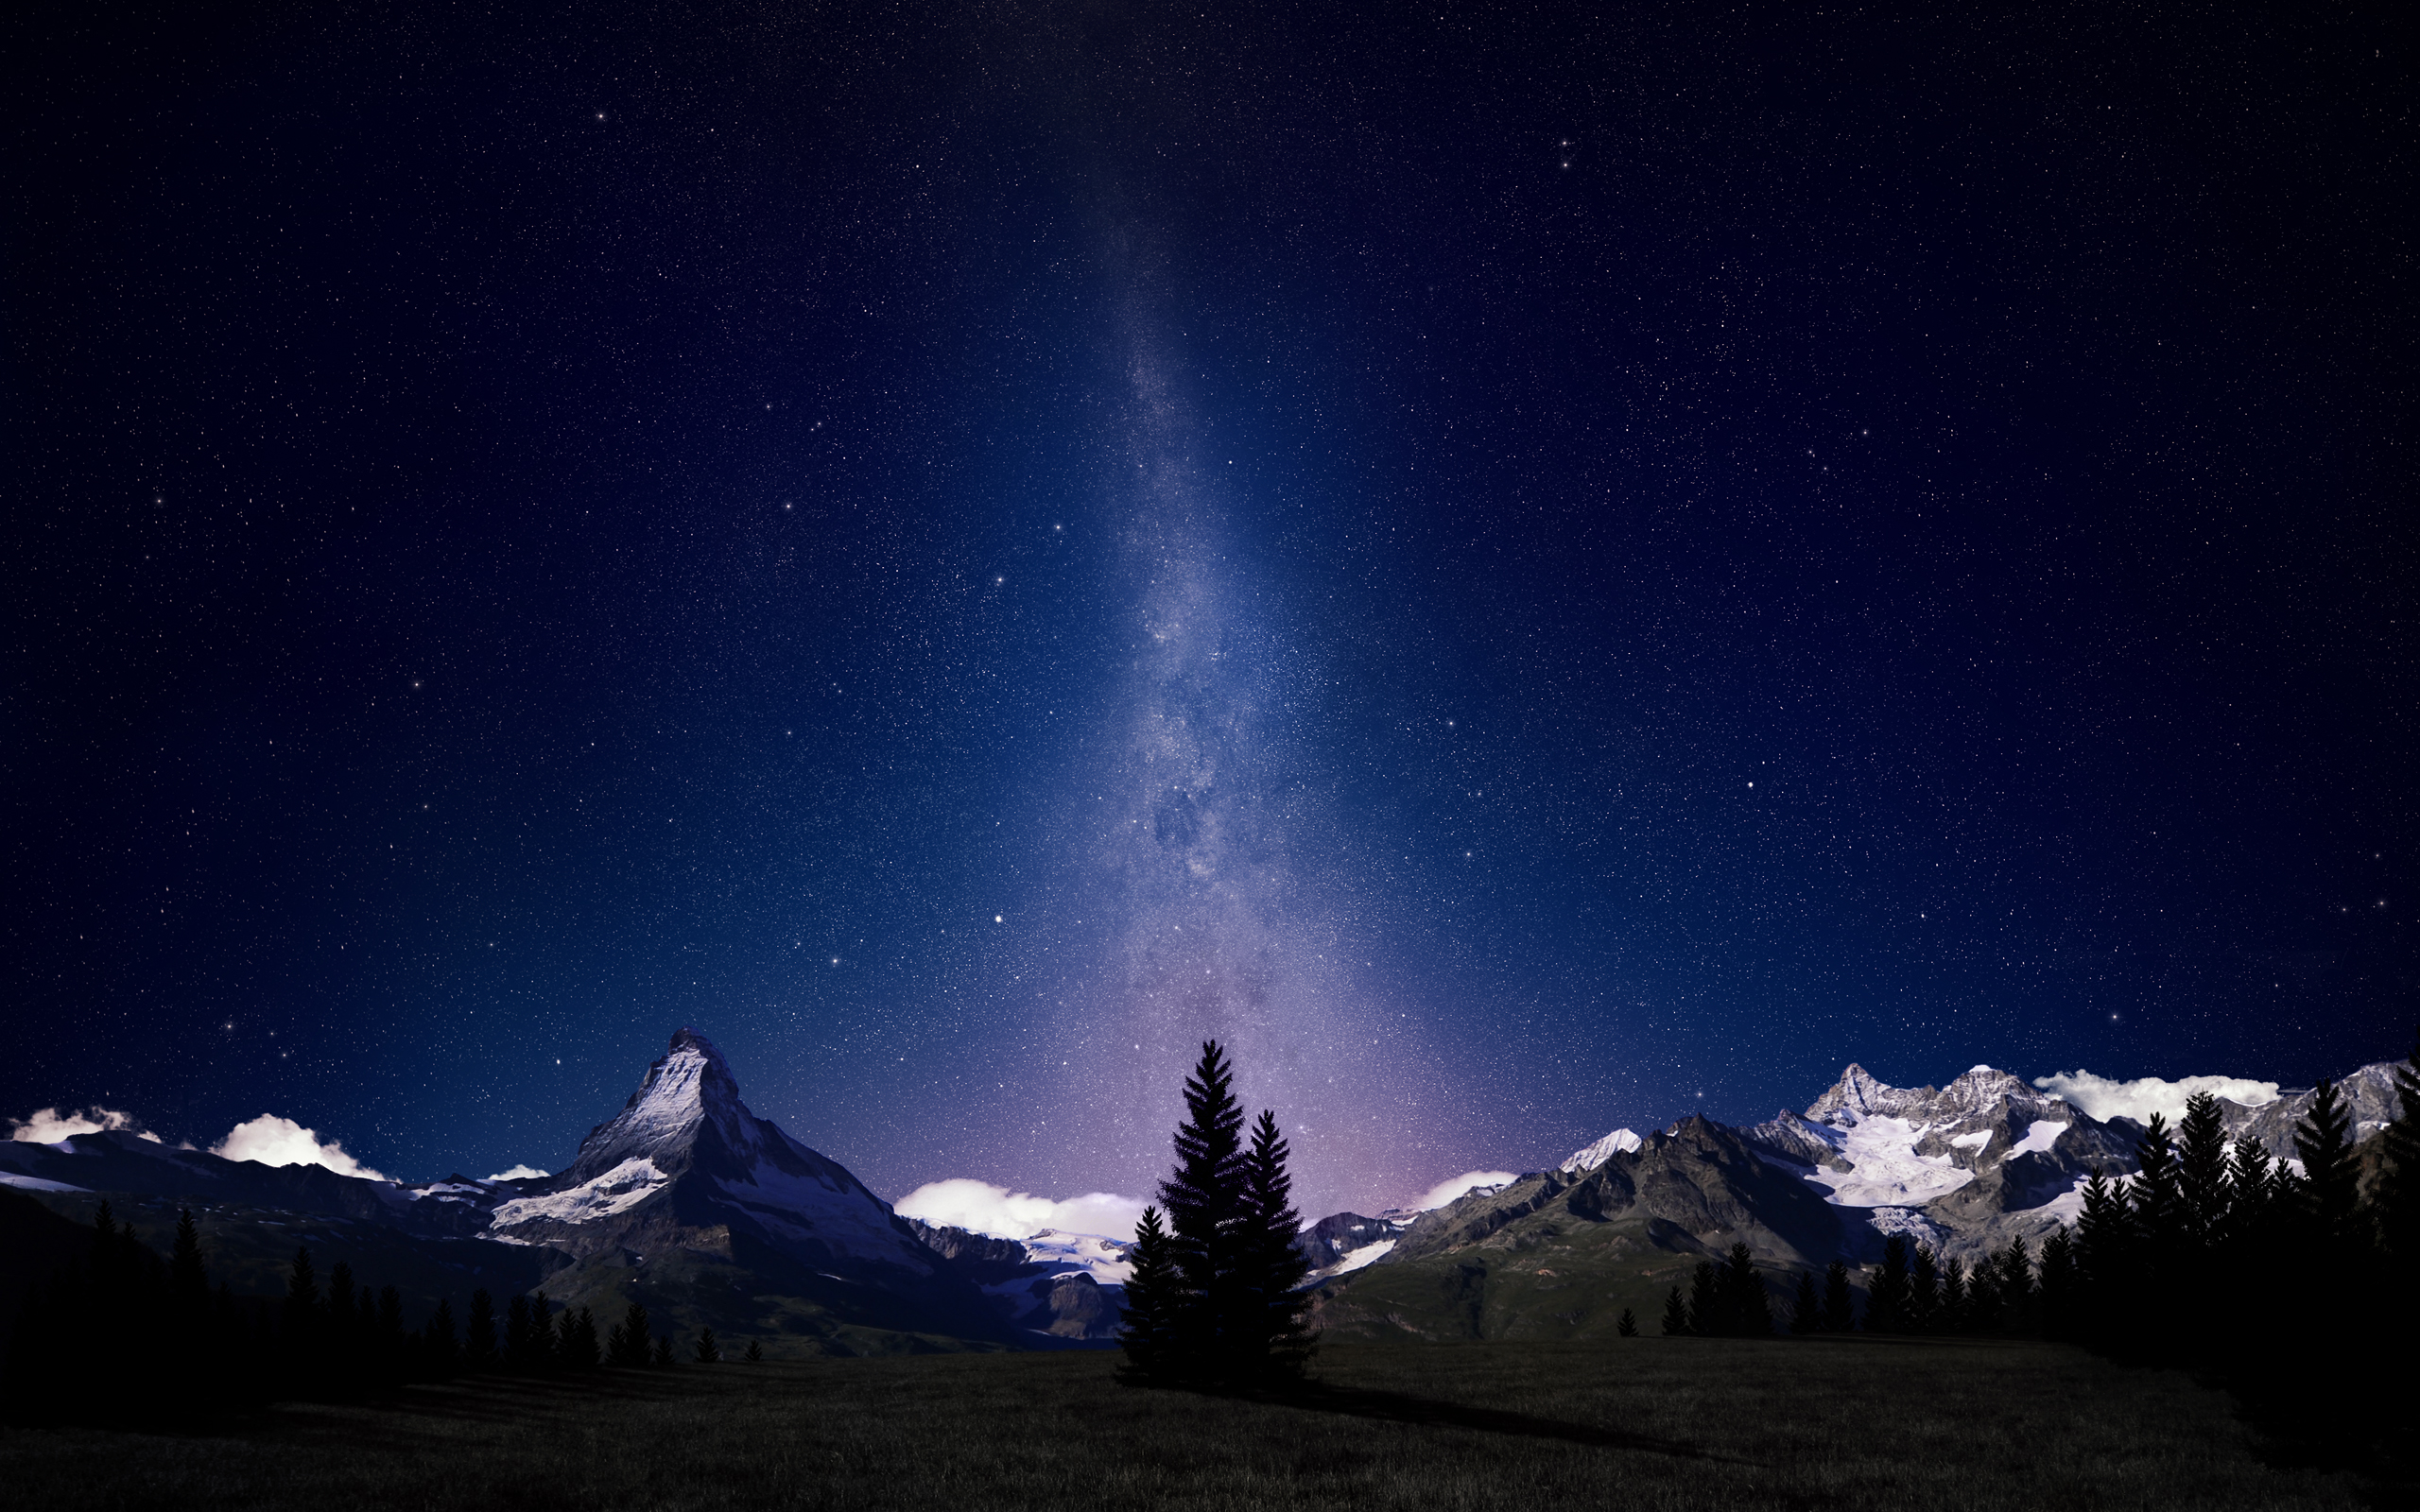 Alpine Night Sky: Majestic mountain under a starry night sky.